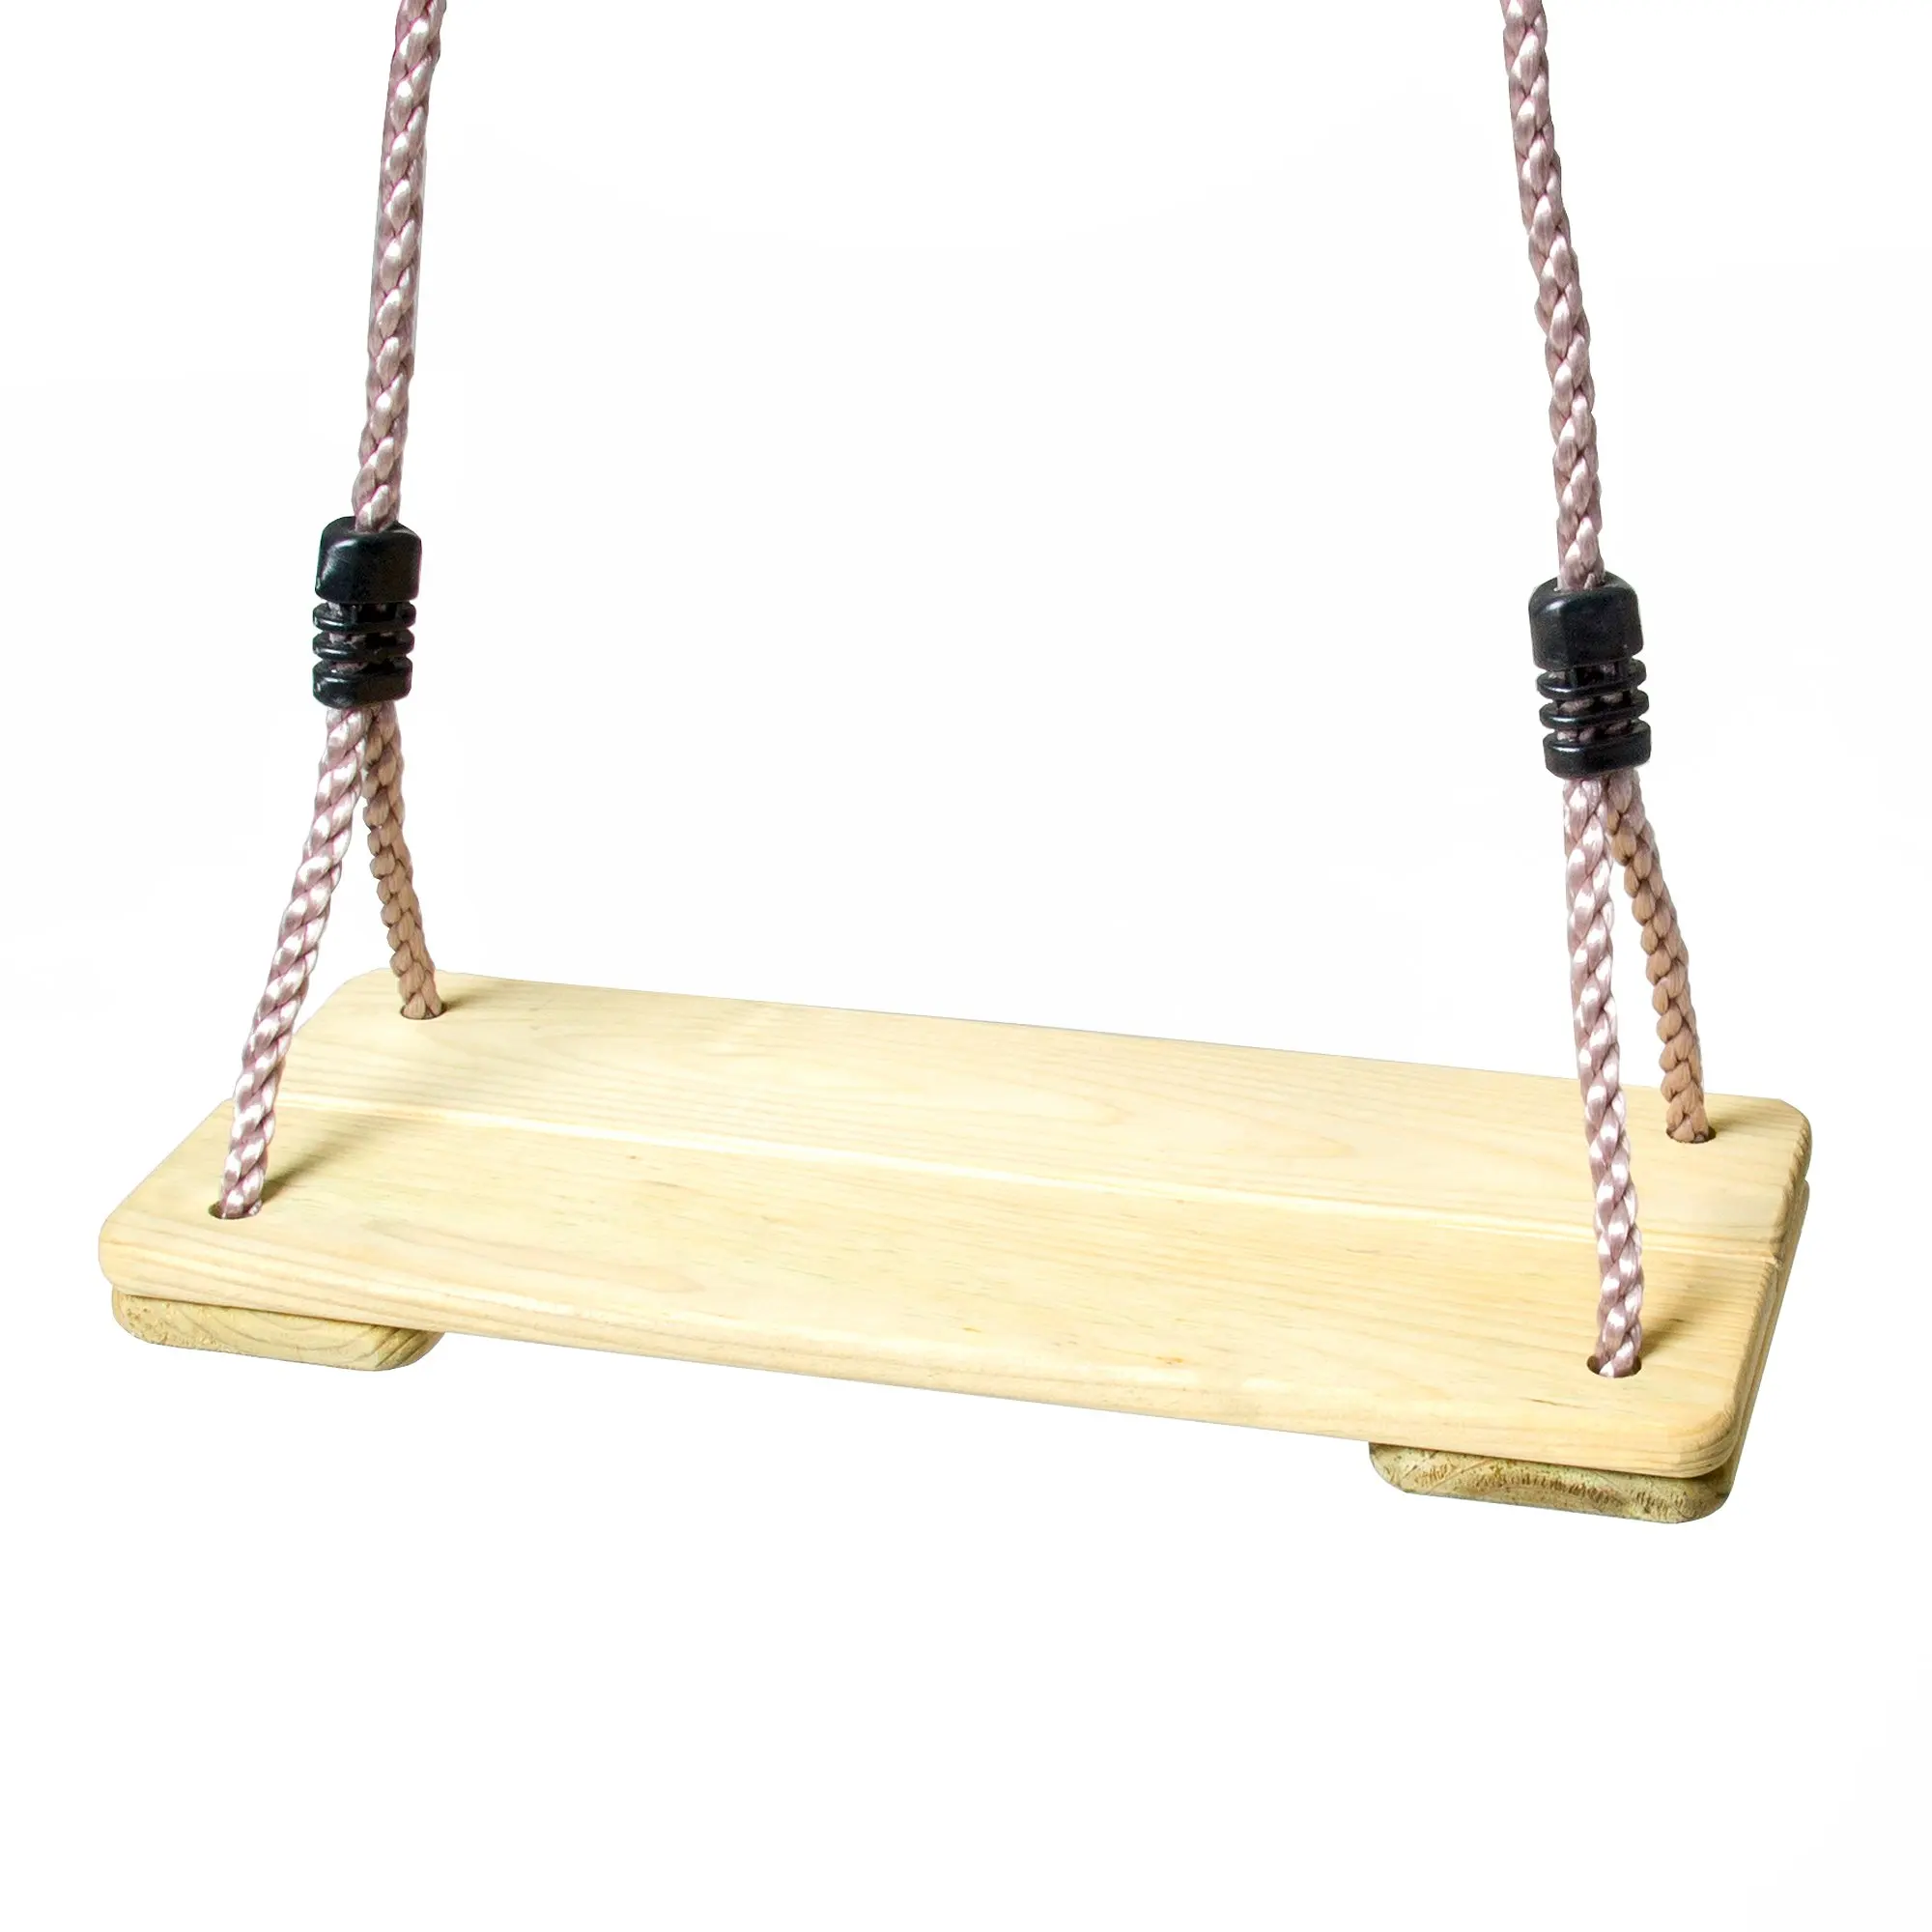 Cheap Diy Wood Swing Set Find Diy Wood Swing Set Deals On Line At Alibaba Com